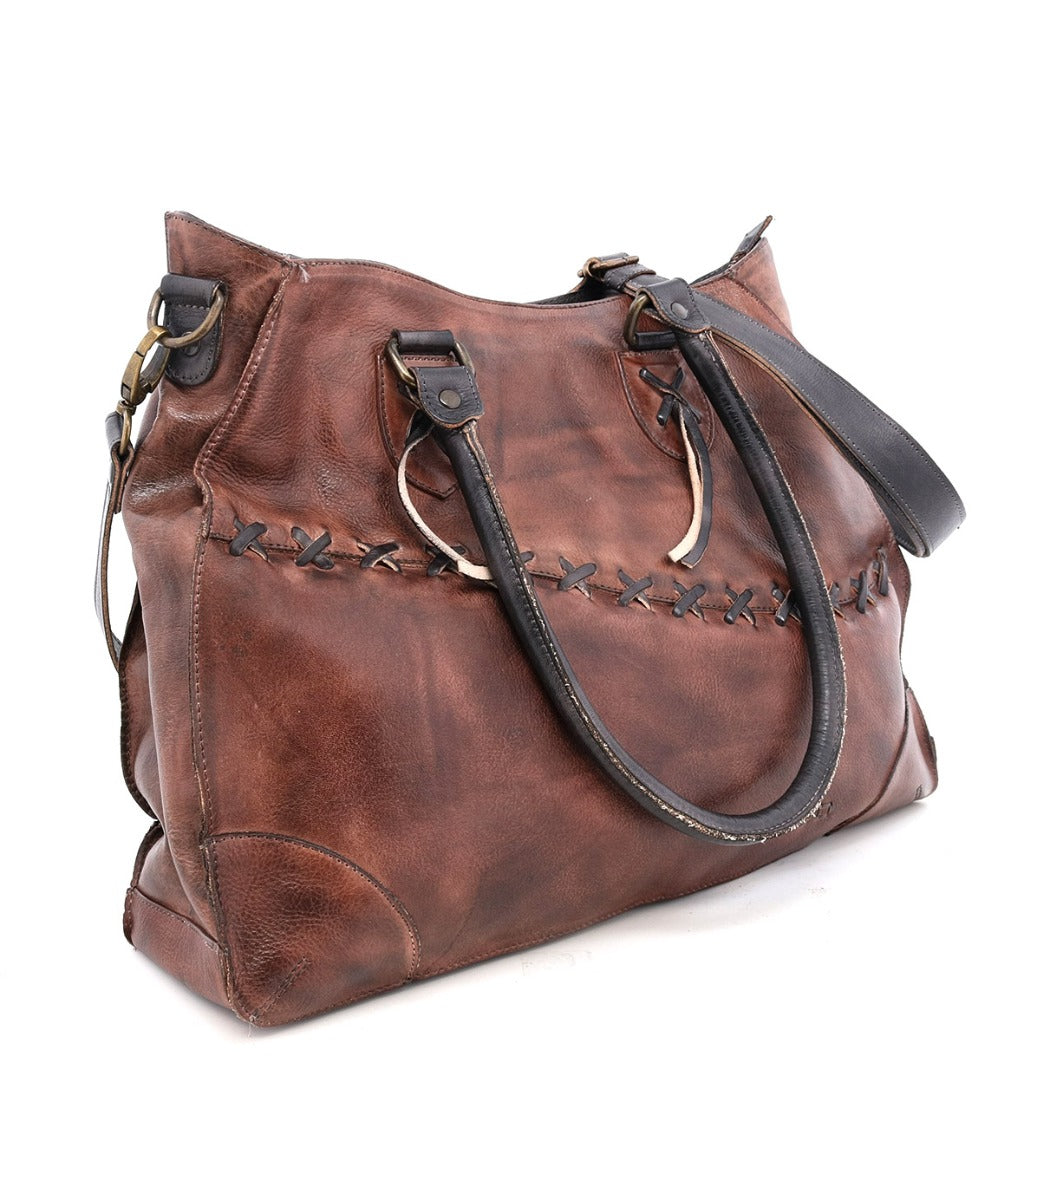 A teak Bed Stu Bruna pure leather bag with straps.